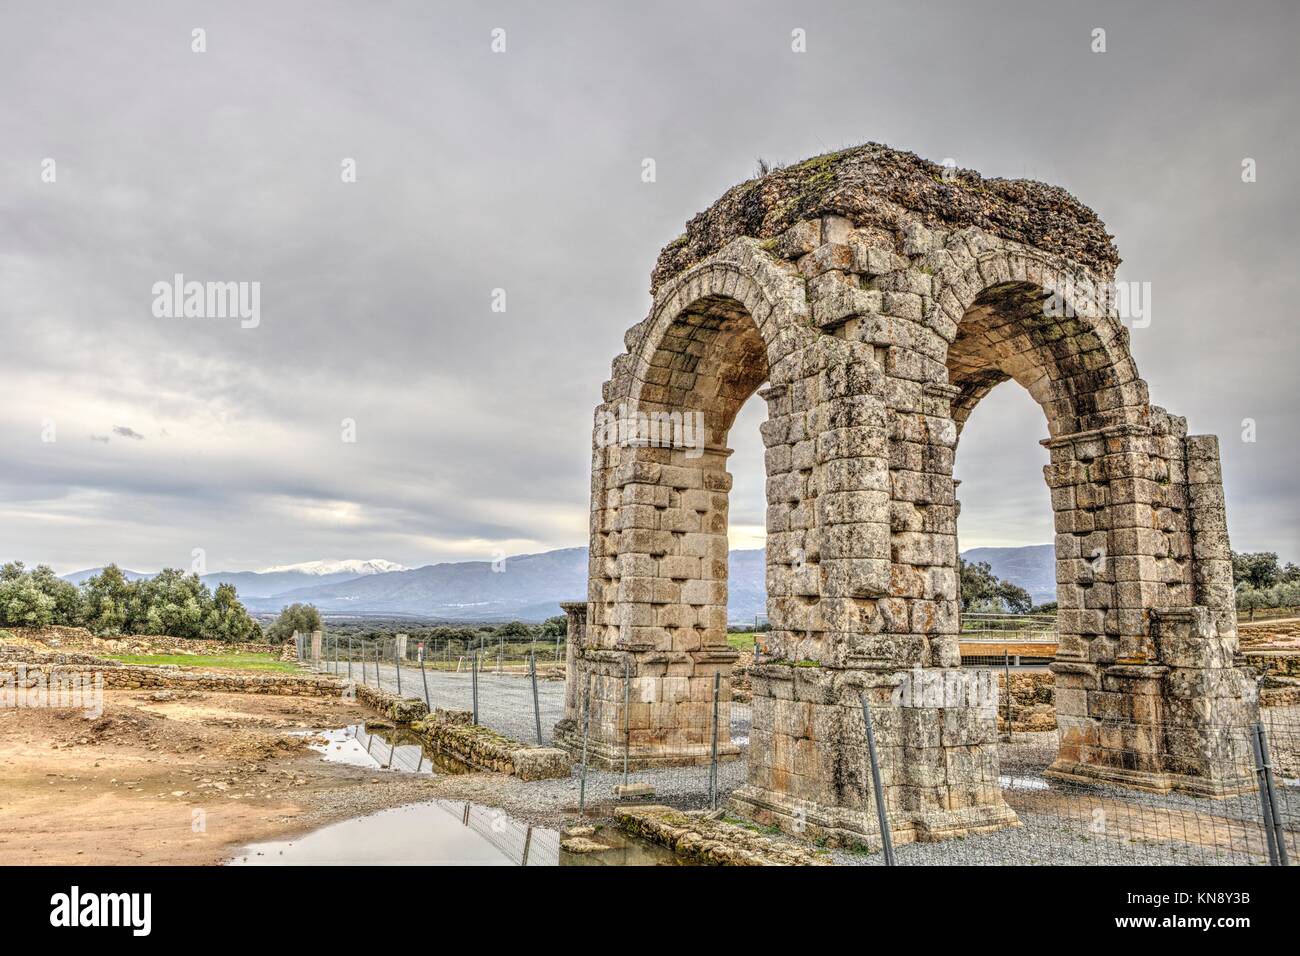 Roman Arch of Caparra, (1st-2nd century AD). Crossroad ancient city ruins at Silver Route, Via de la Plata, Caceres, Spain. Stock Photo